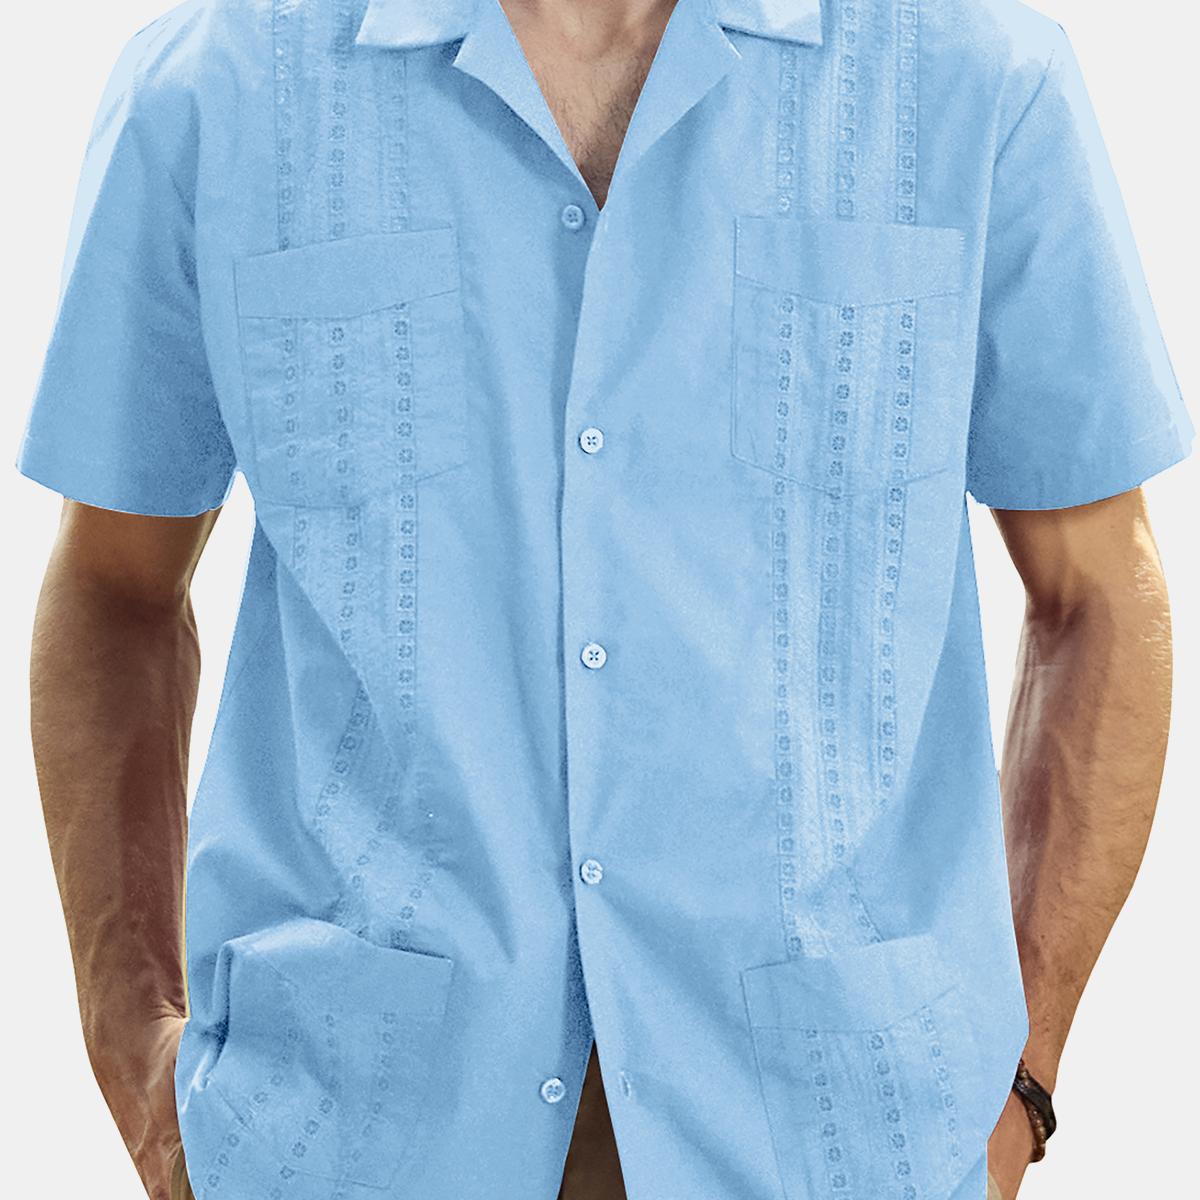 Men's Guayabera Cuban Short Sleeve Casual Button Beach Shirt